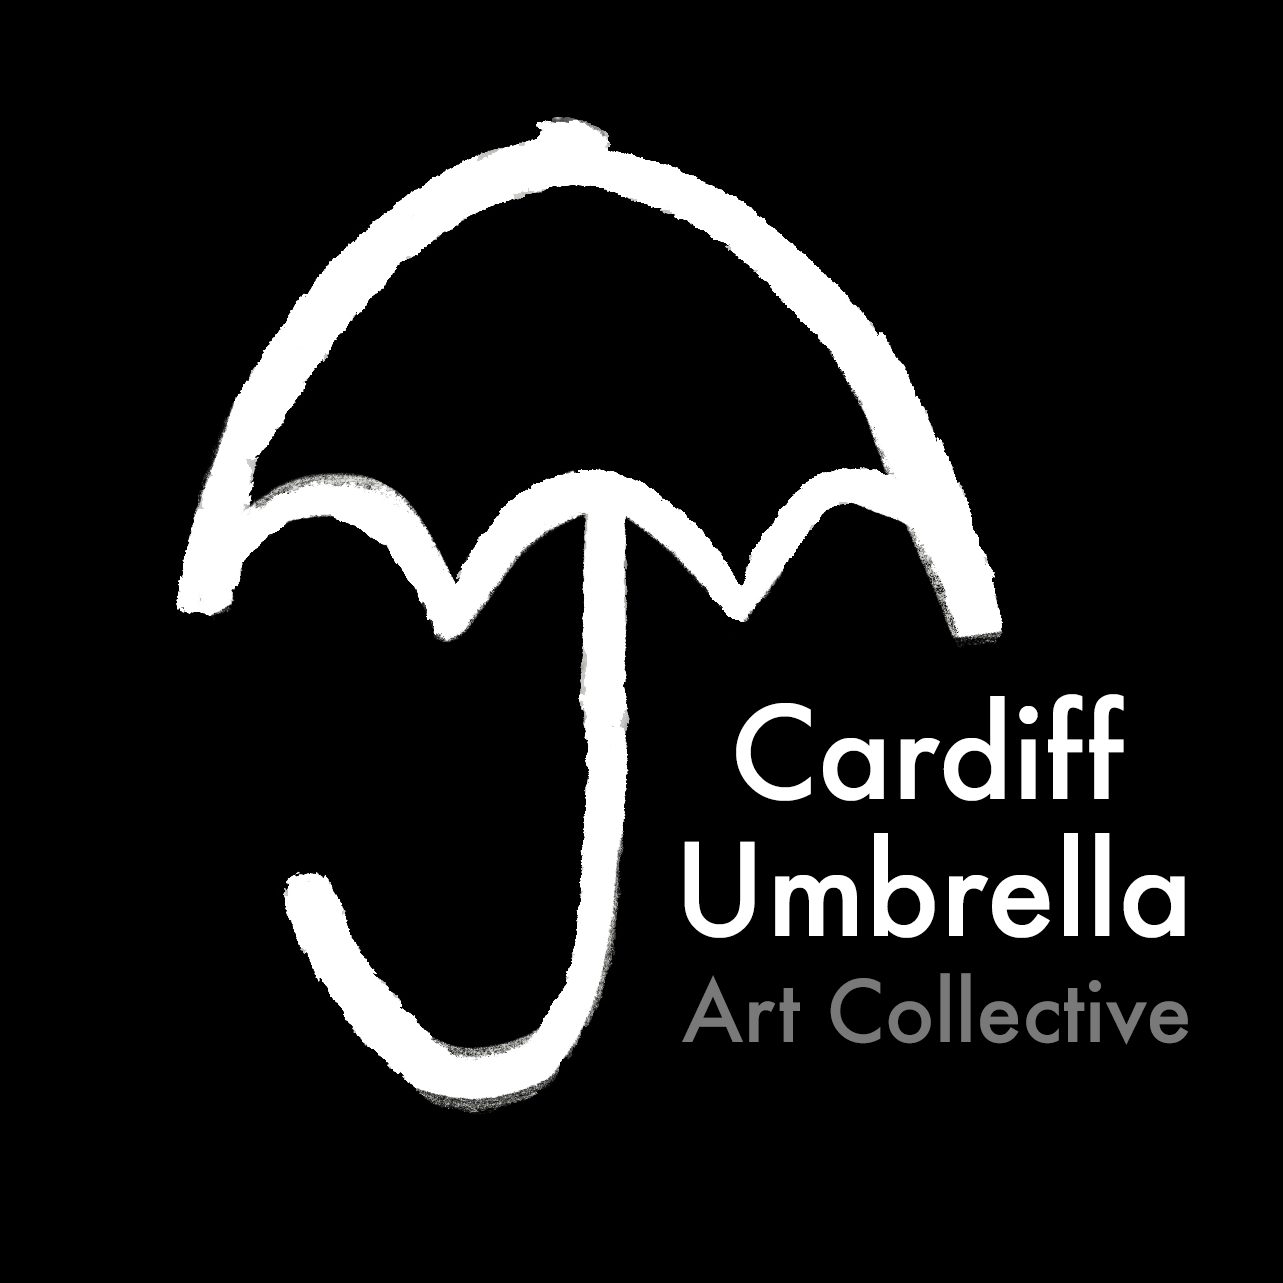 Cardiff Umbrella Art Collective